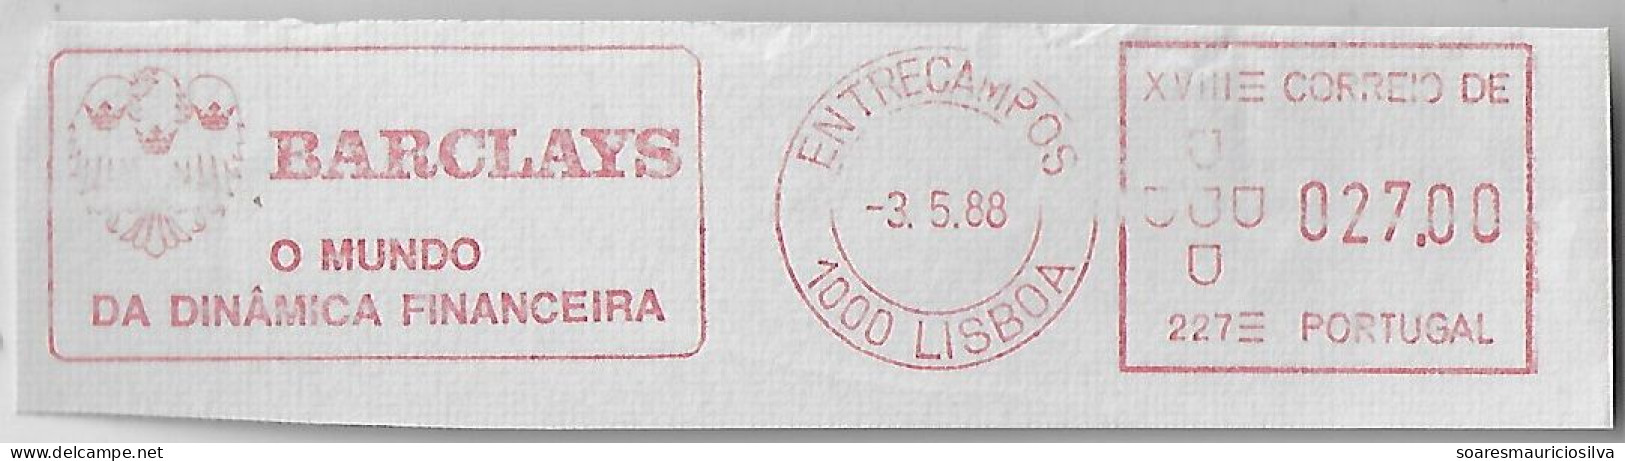 Portugal 1988 Fragment Meter Stamp Hasler Mailmaster Slogan Barclays The World Of Financial Dynamics Lisbon Entrecampos - Storia Postale